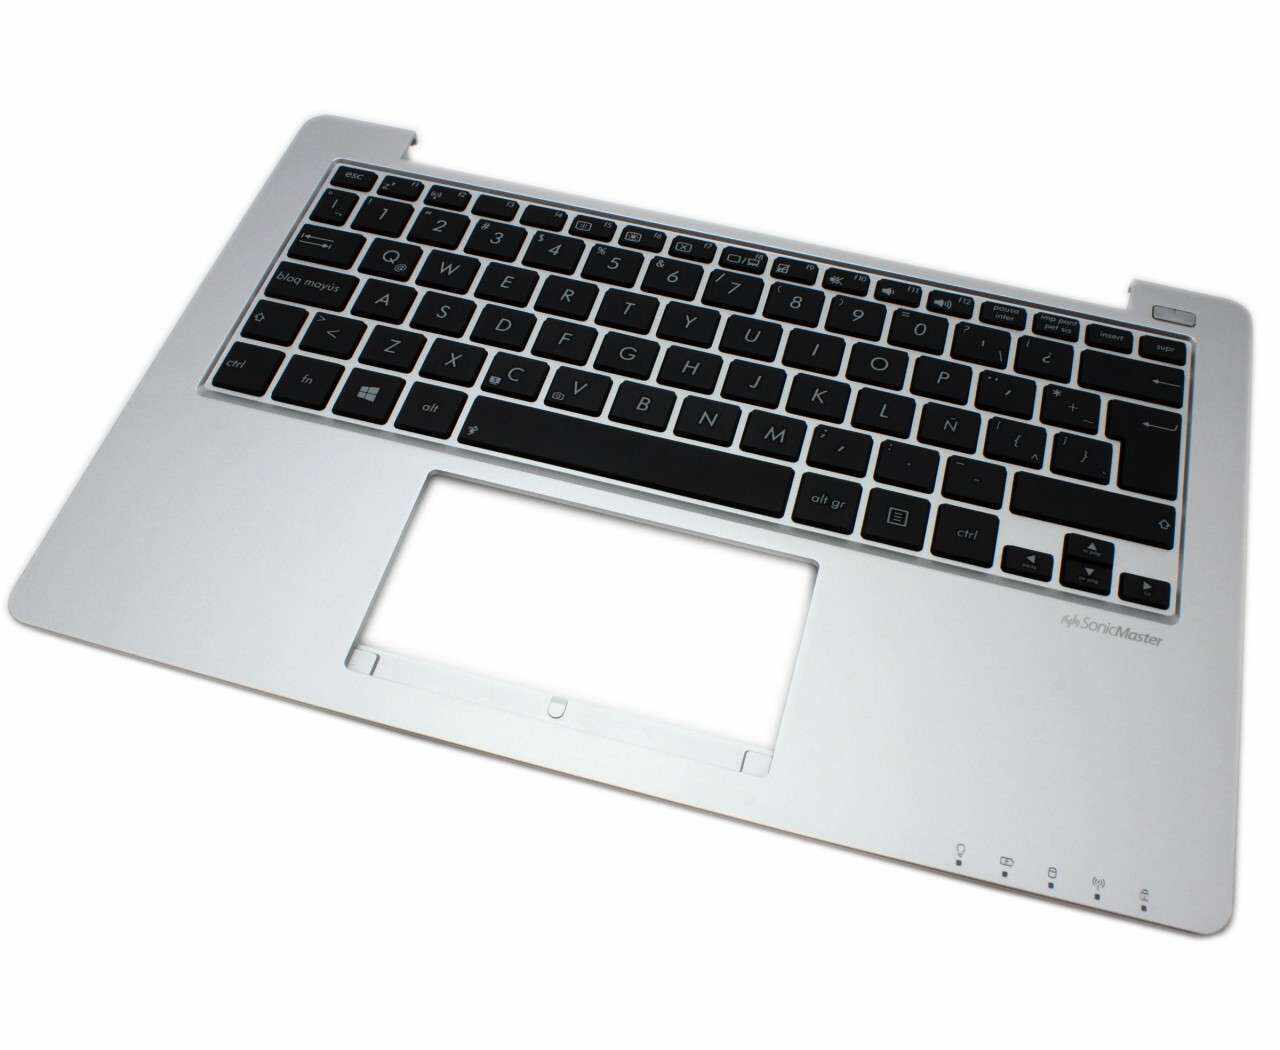 Tastatura Asus VivoBook X201E neagra cu Palmrest argintiu